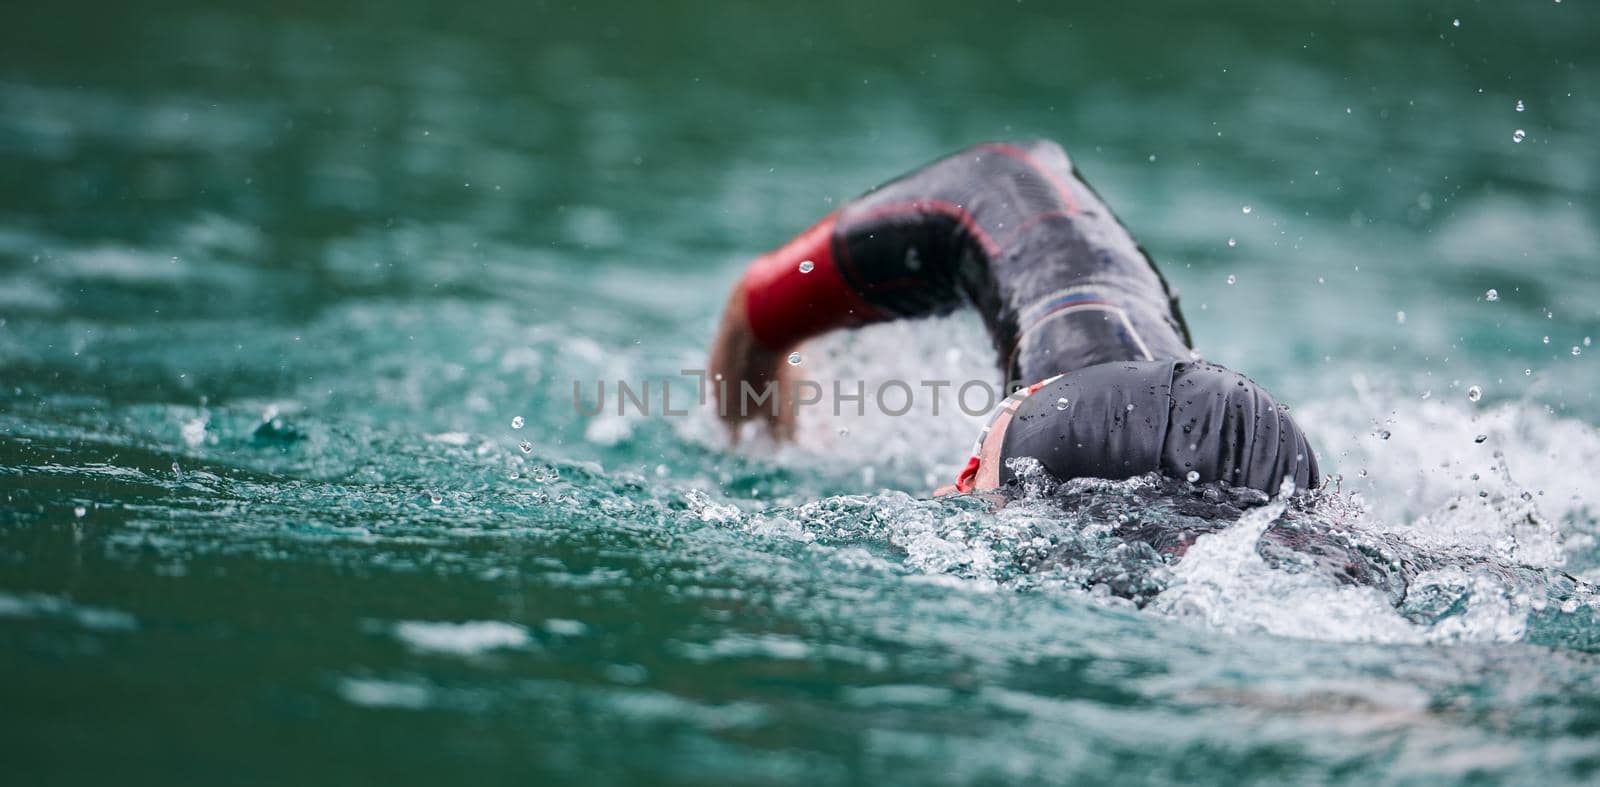 triathlon athlete swimming on lake wearing wetsuit by dotshock